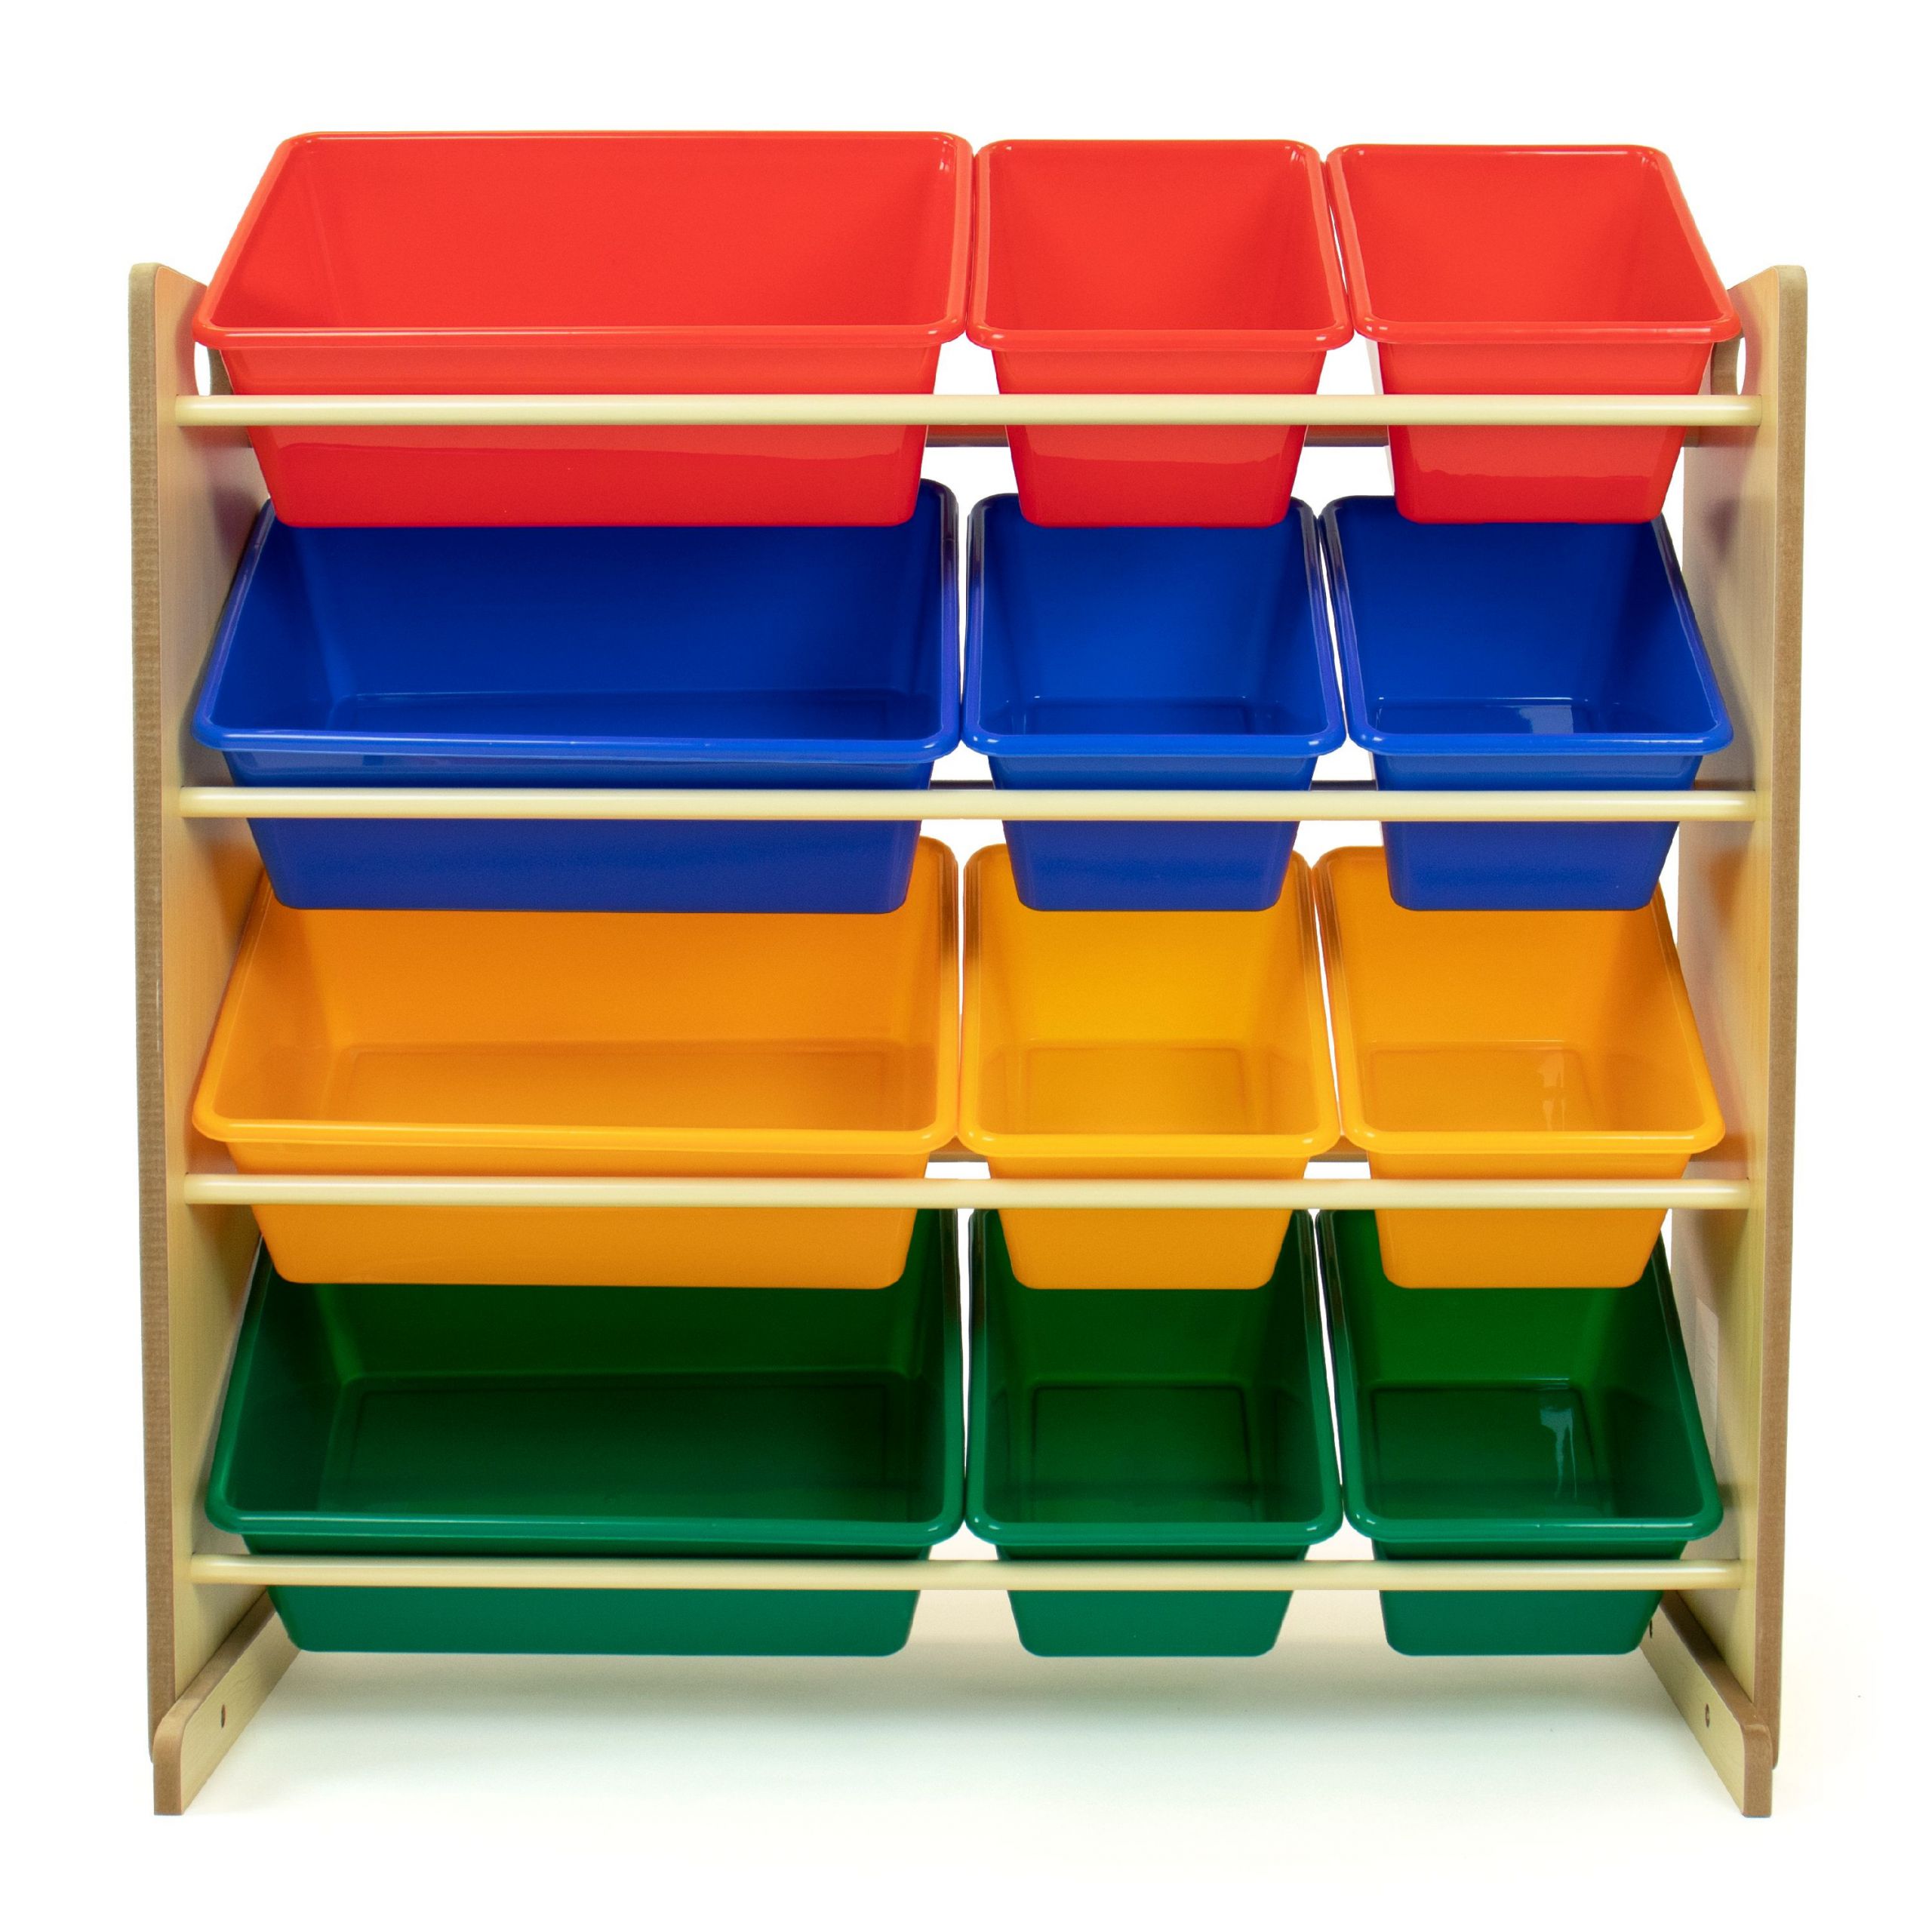 Child Storage Bins
 Tot Tutors Kids Toy Storage Organizer with 12 Plastic Bins